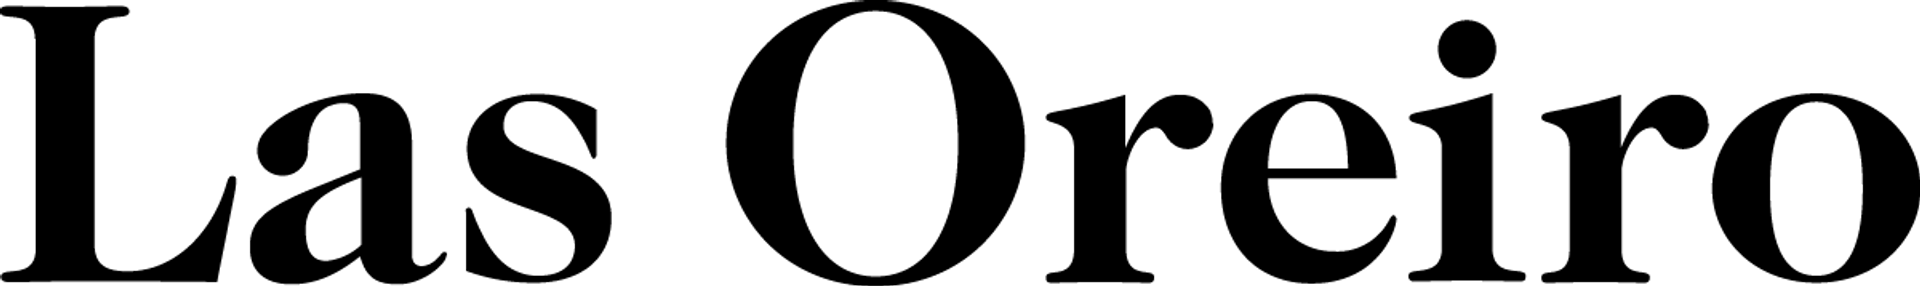 LAS OREIRO logo de catálogo